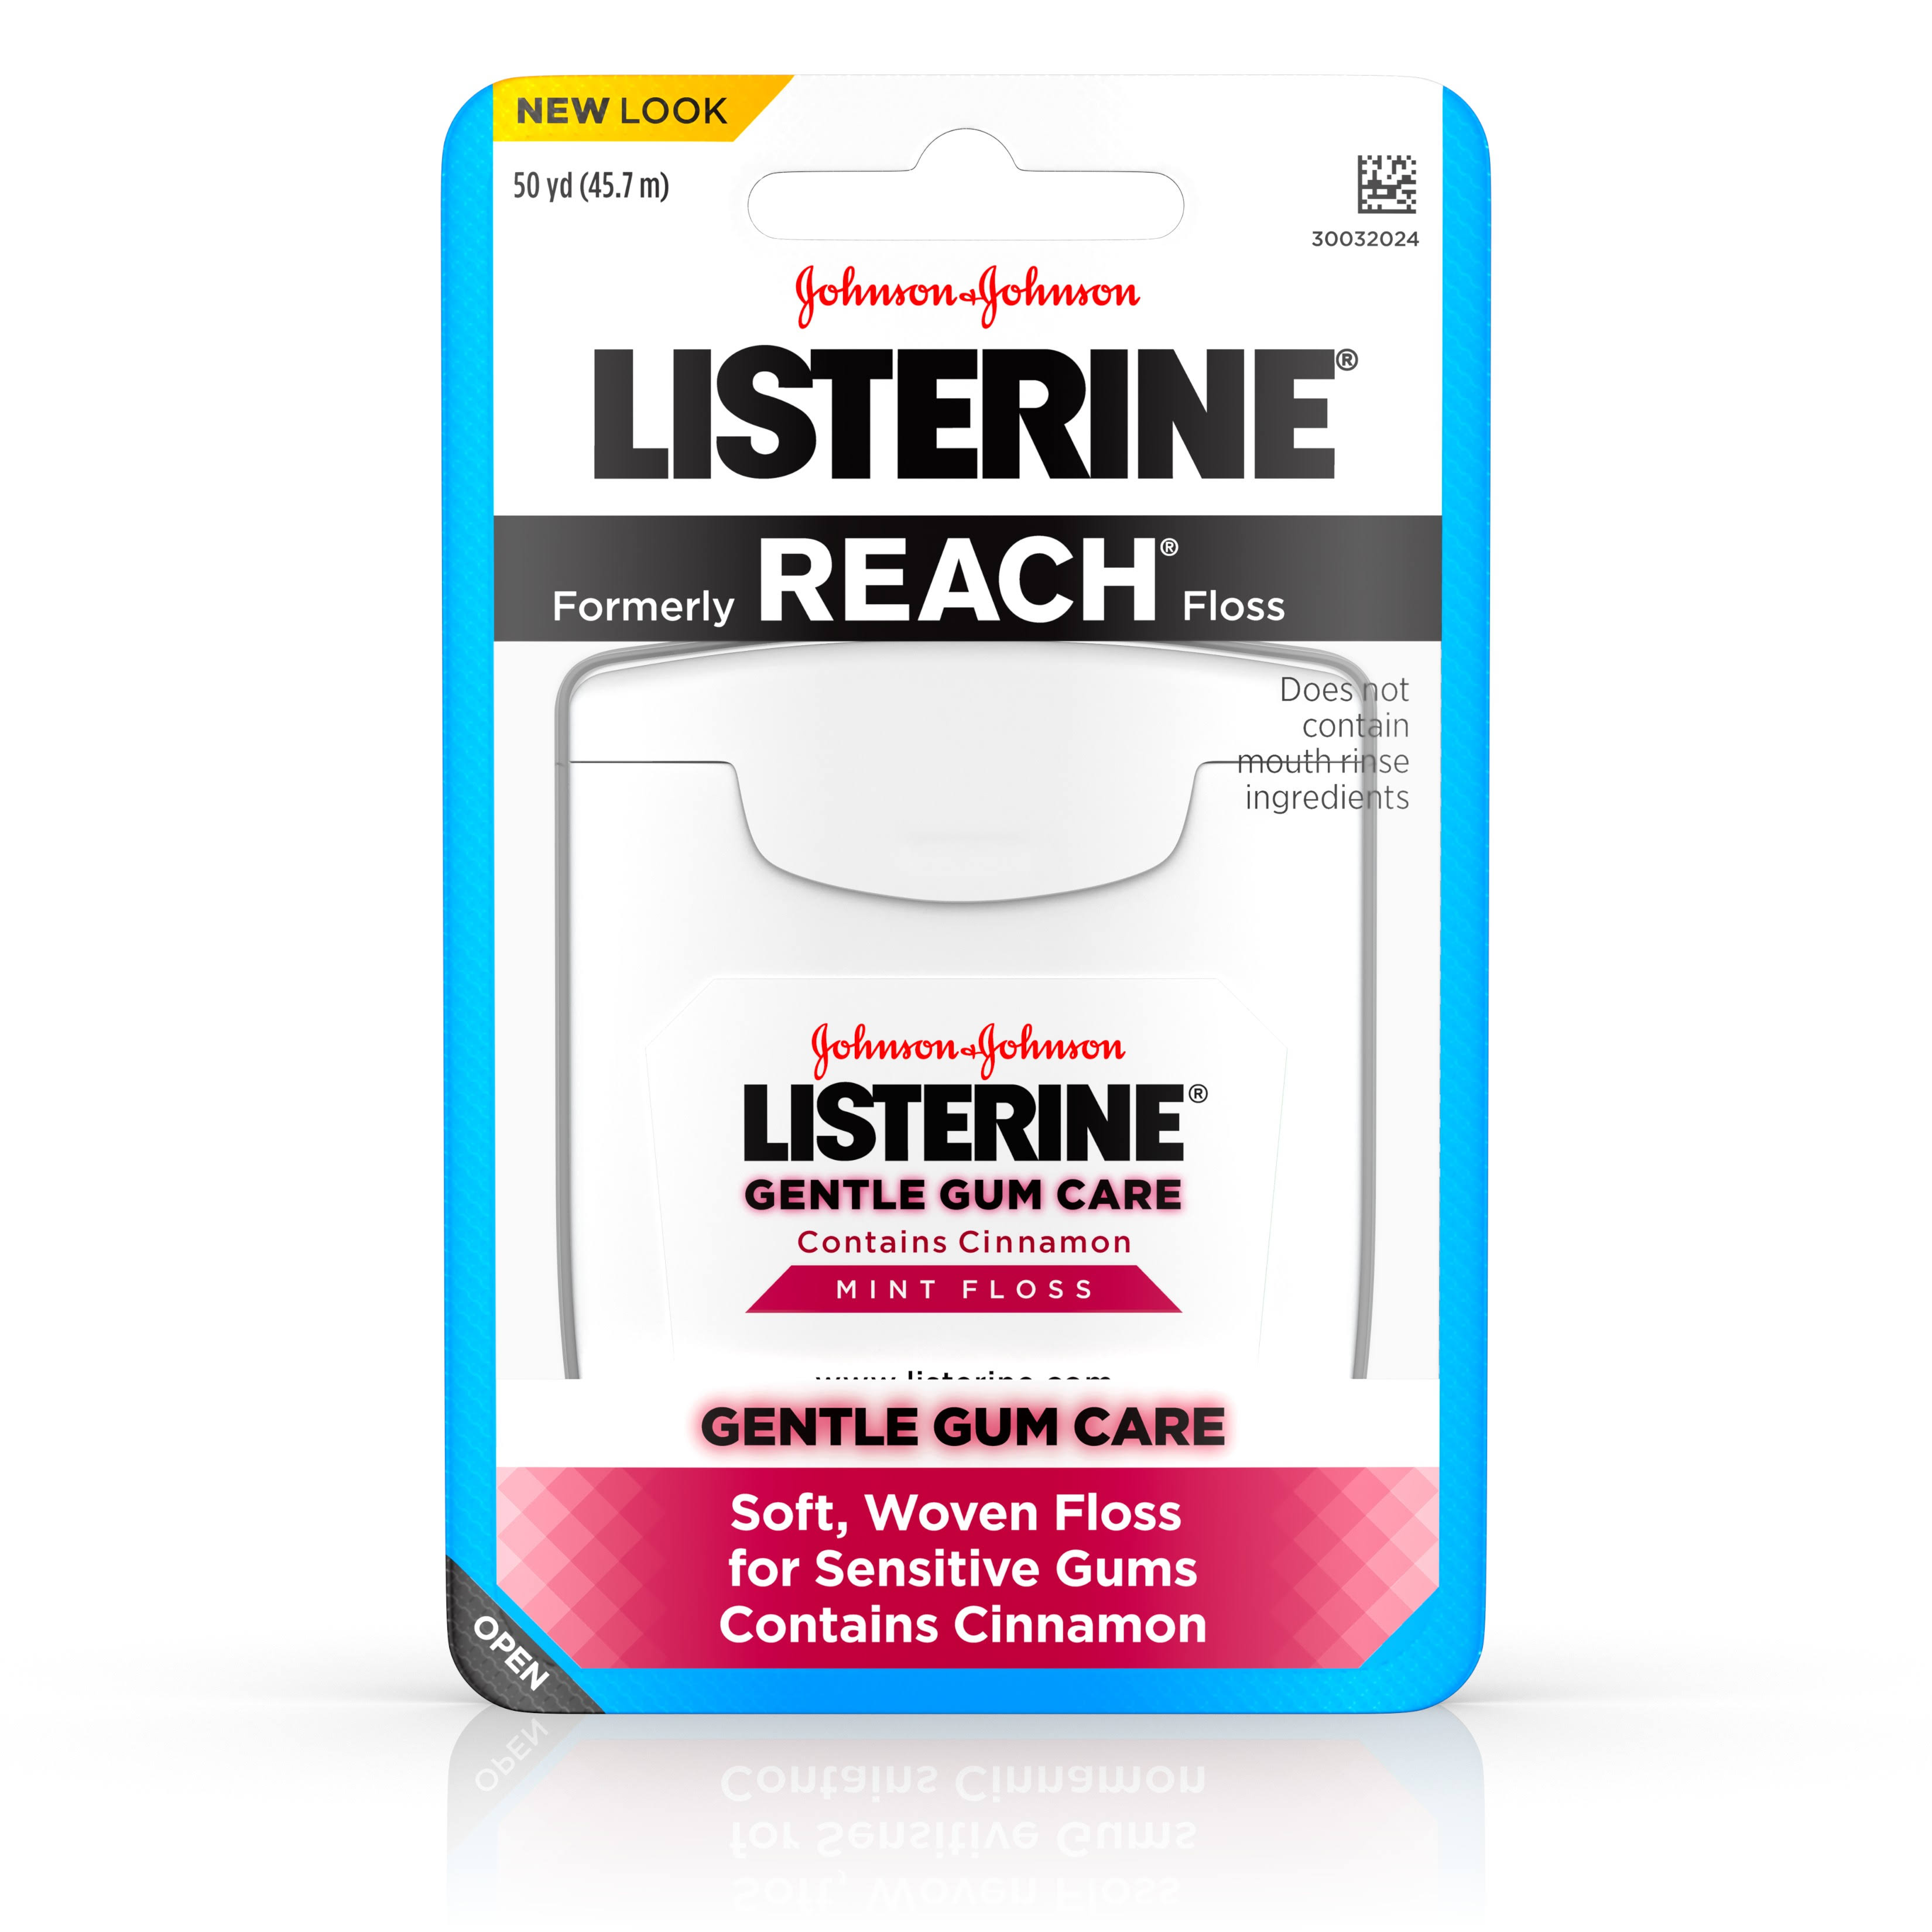 Listerine Gentle Gum Care Woven Floss - Mint, 45.7m